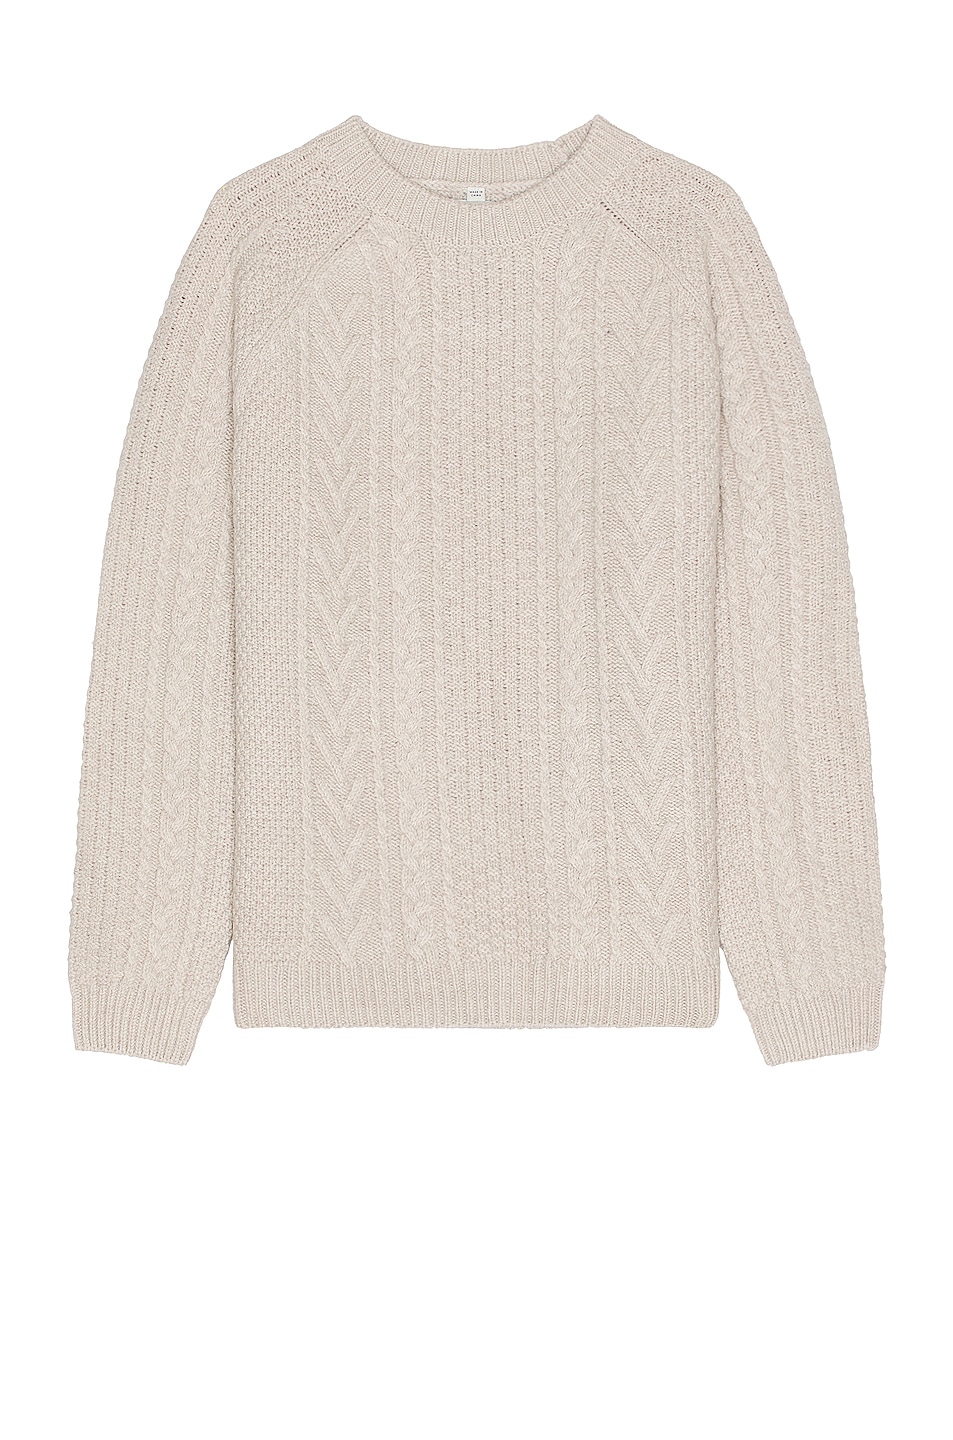 Merino Wool Fisherman Sweater in Light Grey